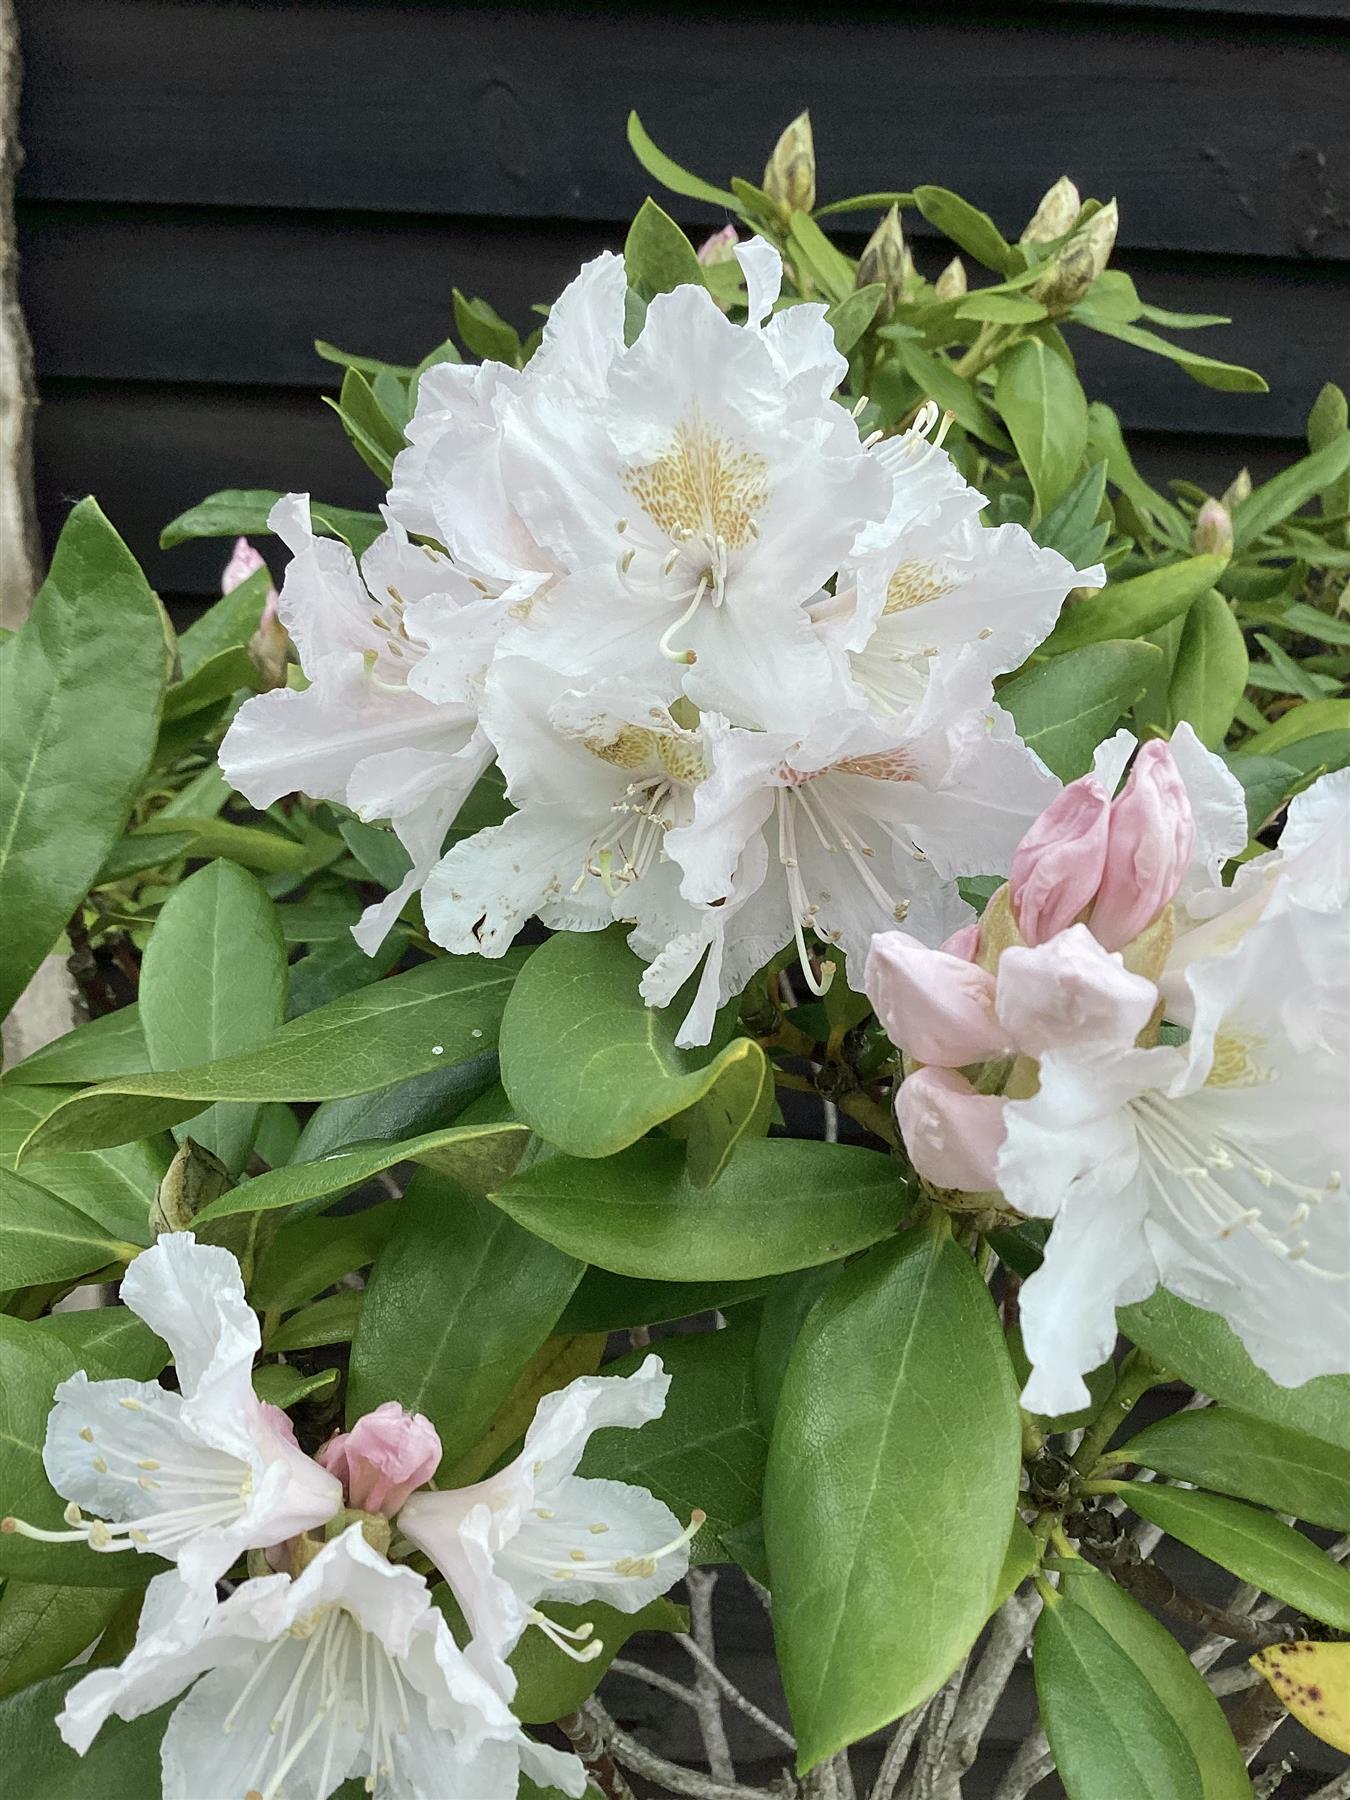 Rhododendron 'Cunningham's White' - 90-110cm, 50lt